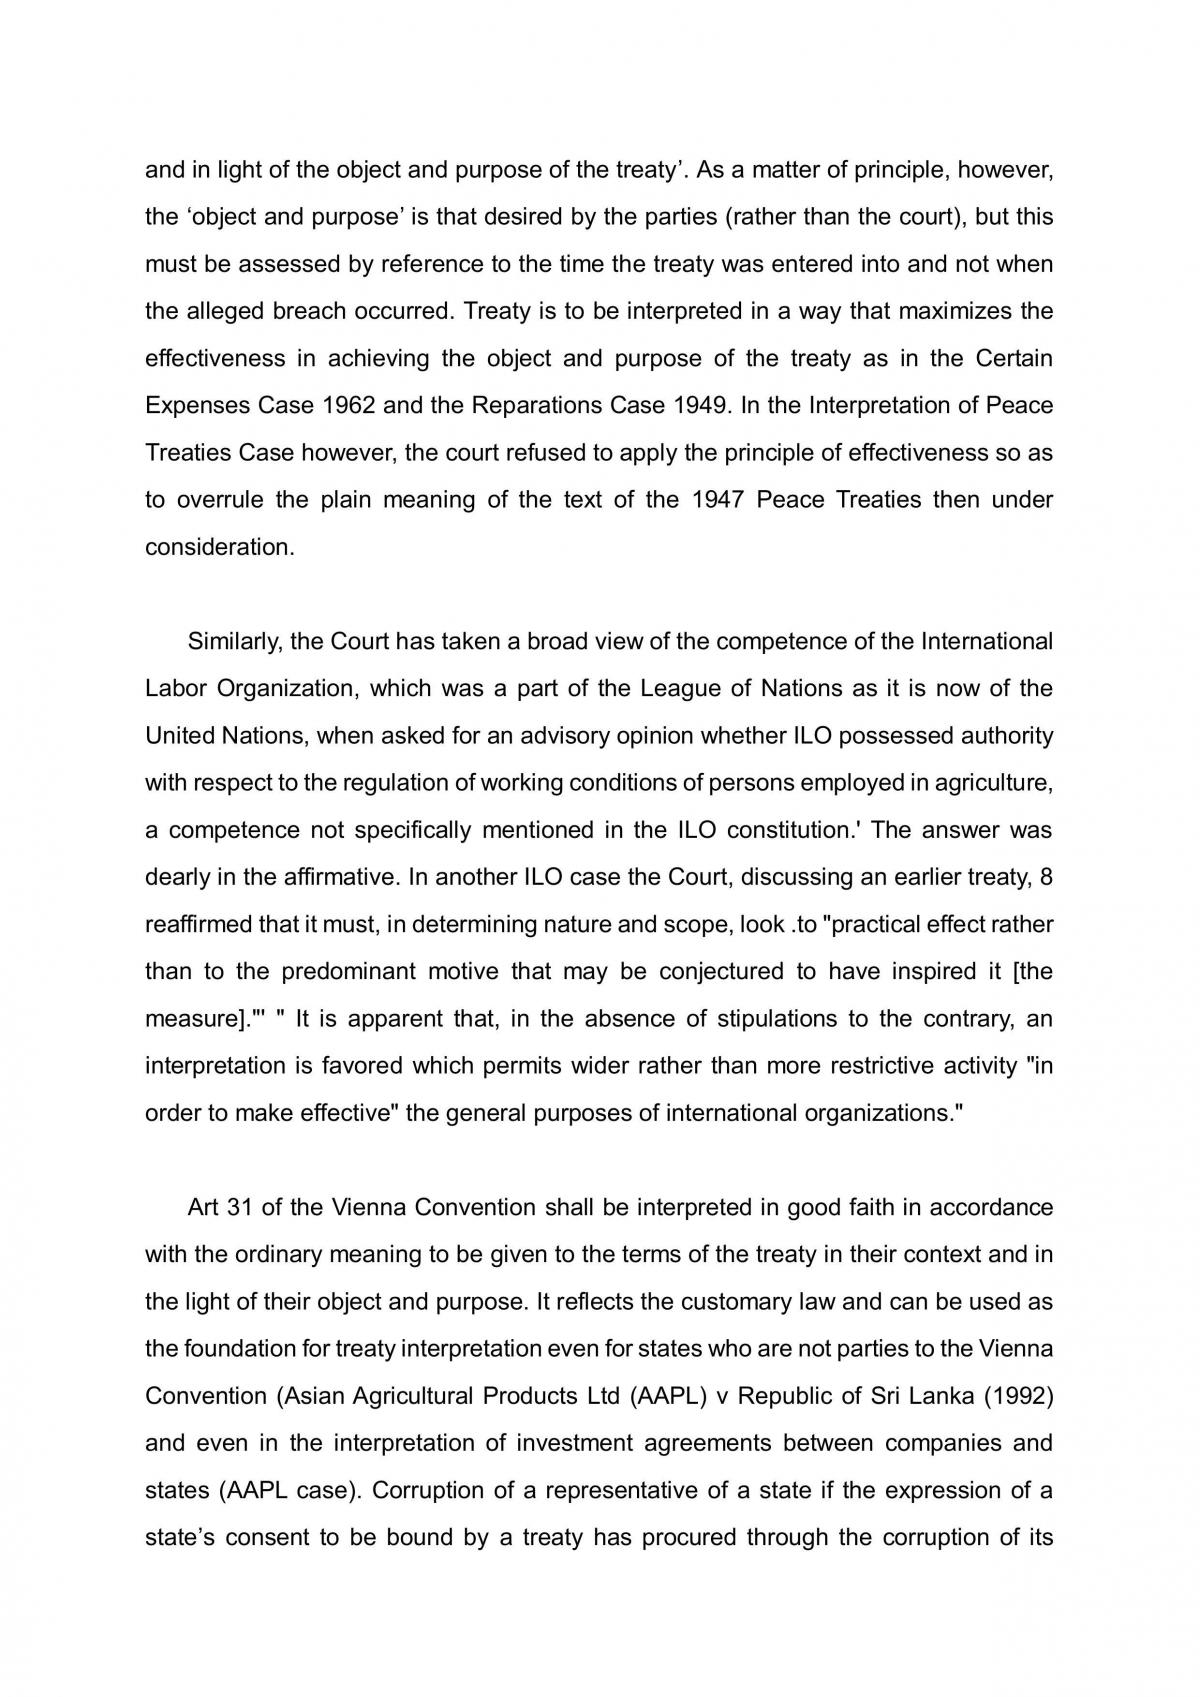 Essay discussing methods in interpreting treaties - Page 2